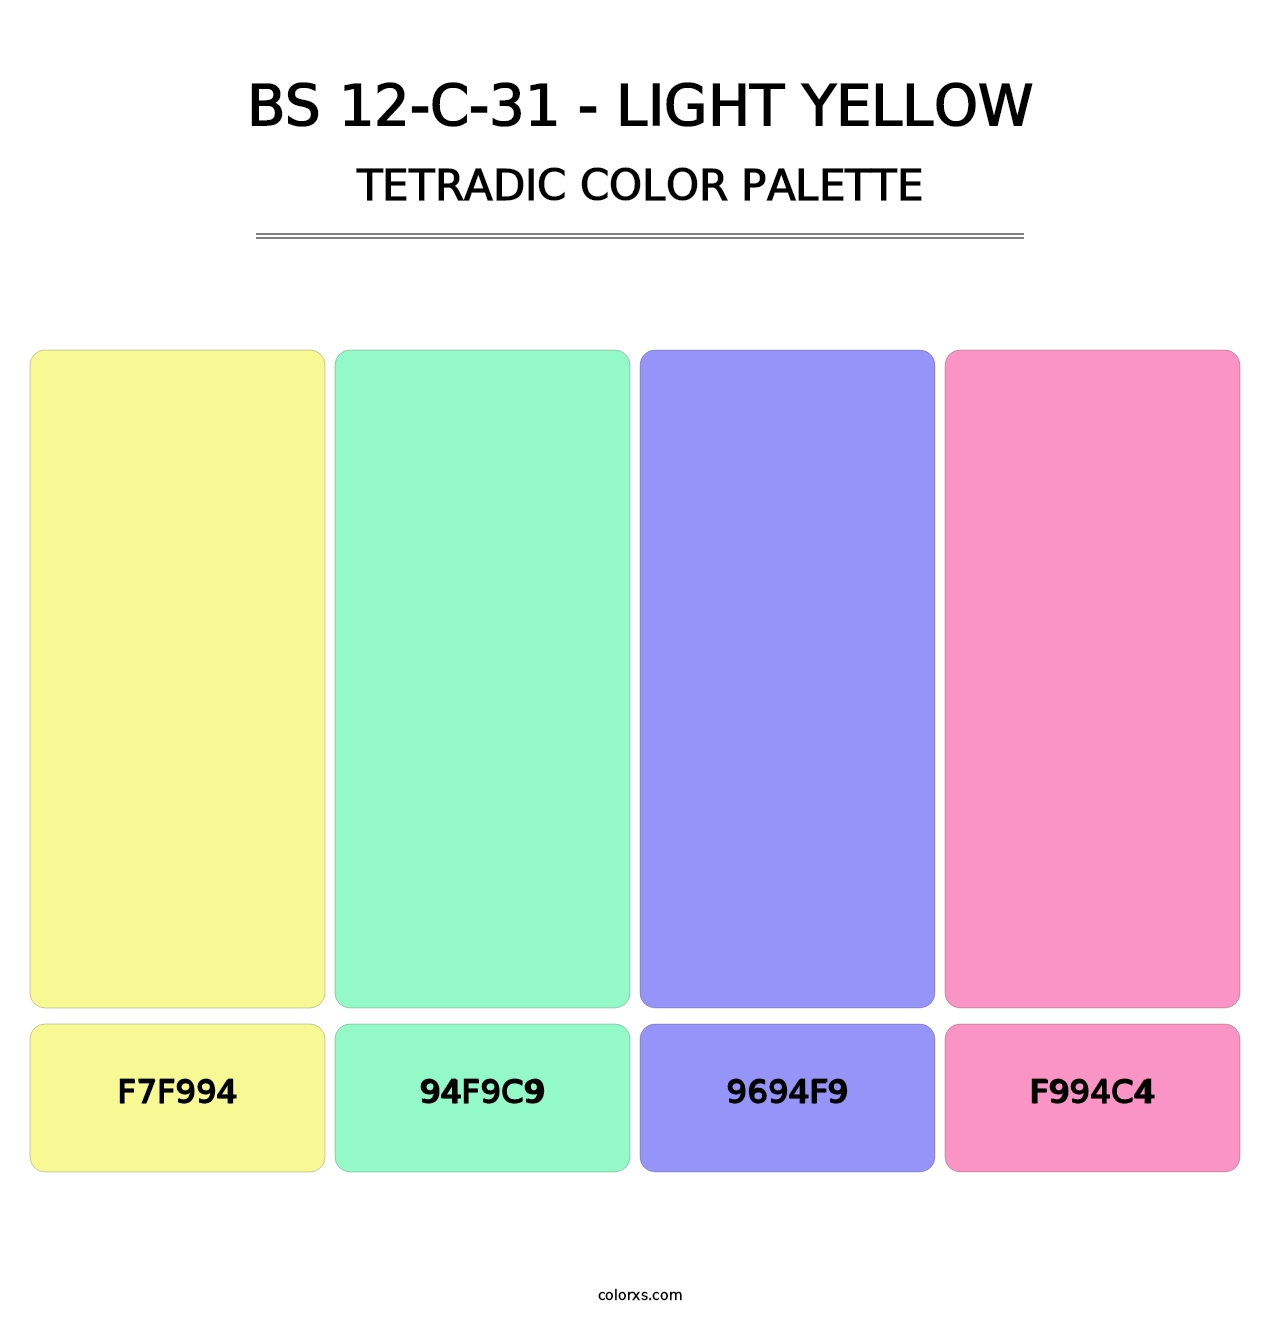 BS 12-C-31 - Light Yellow - Tetradic Color Palette